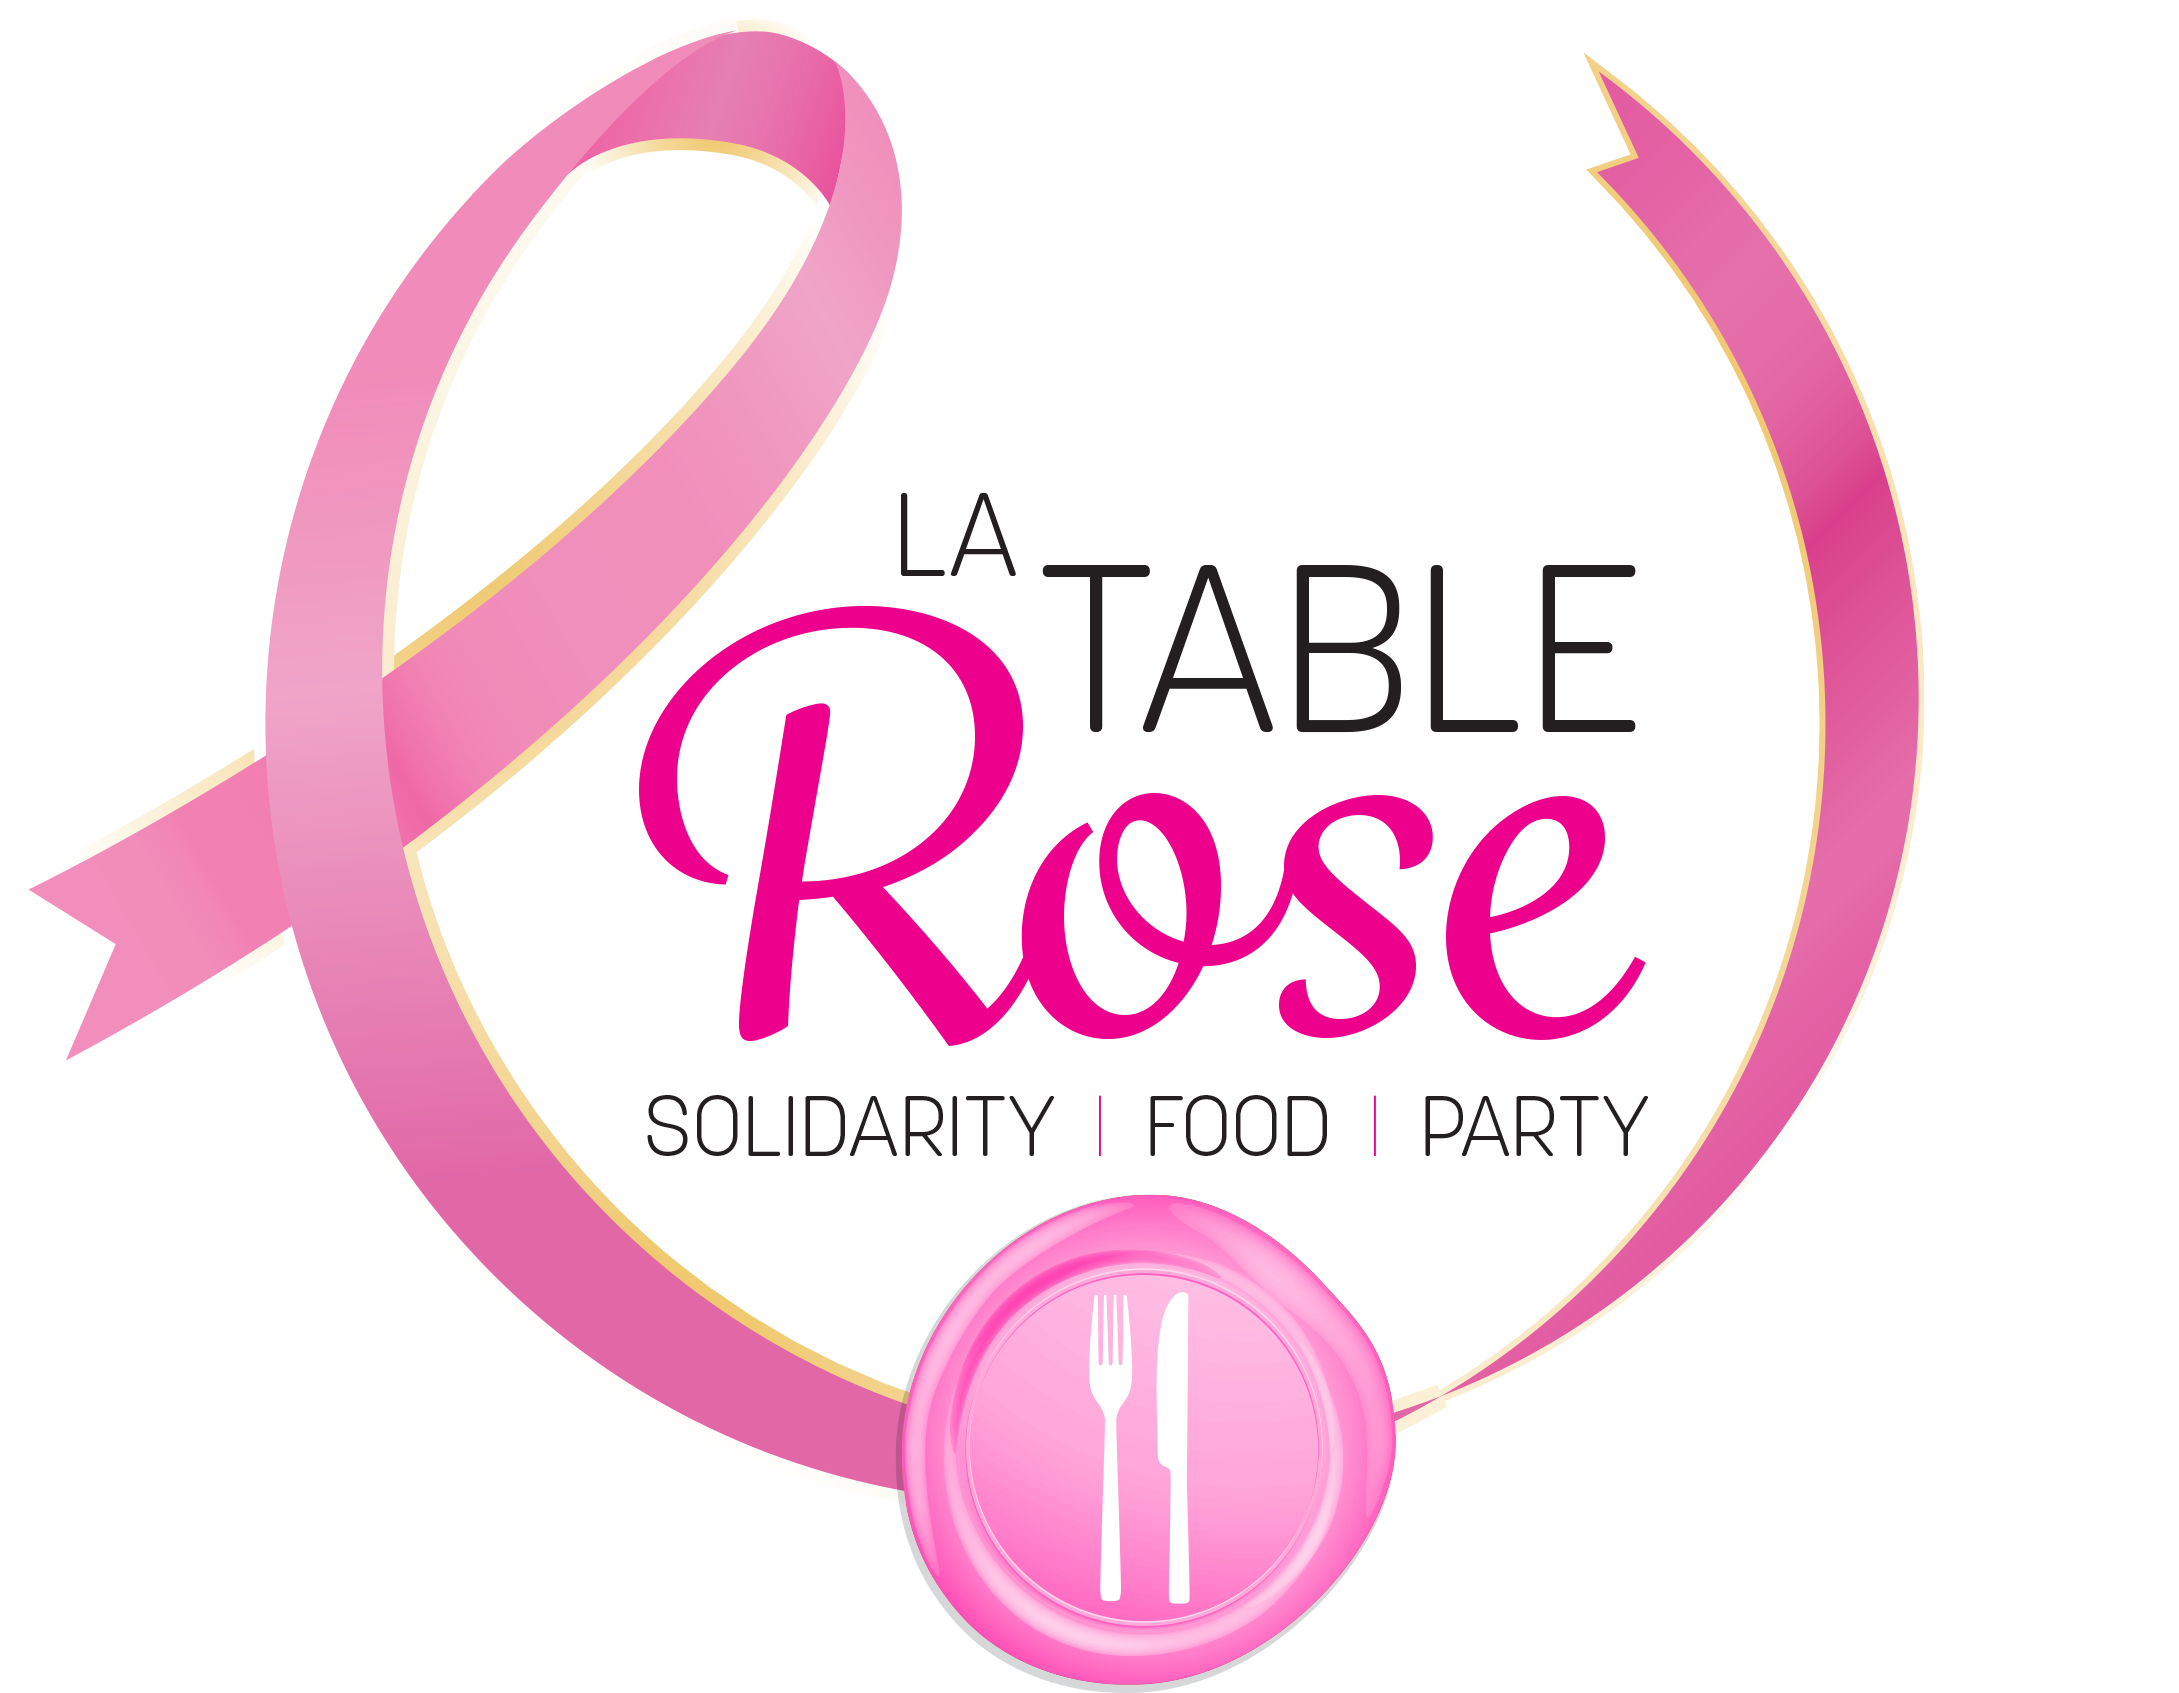 La Table Rose